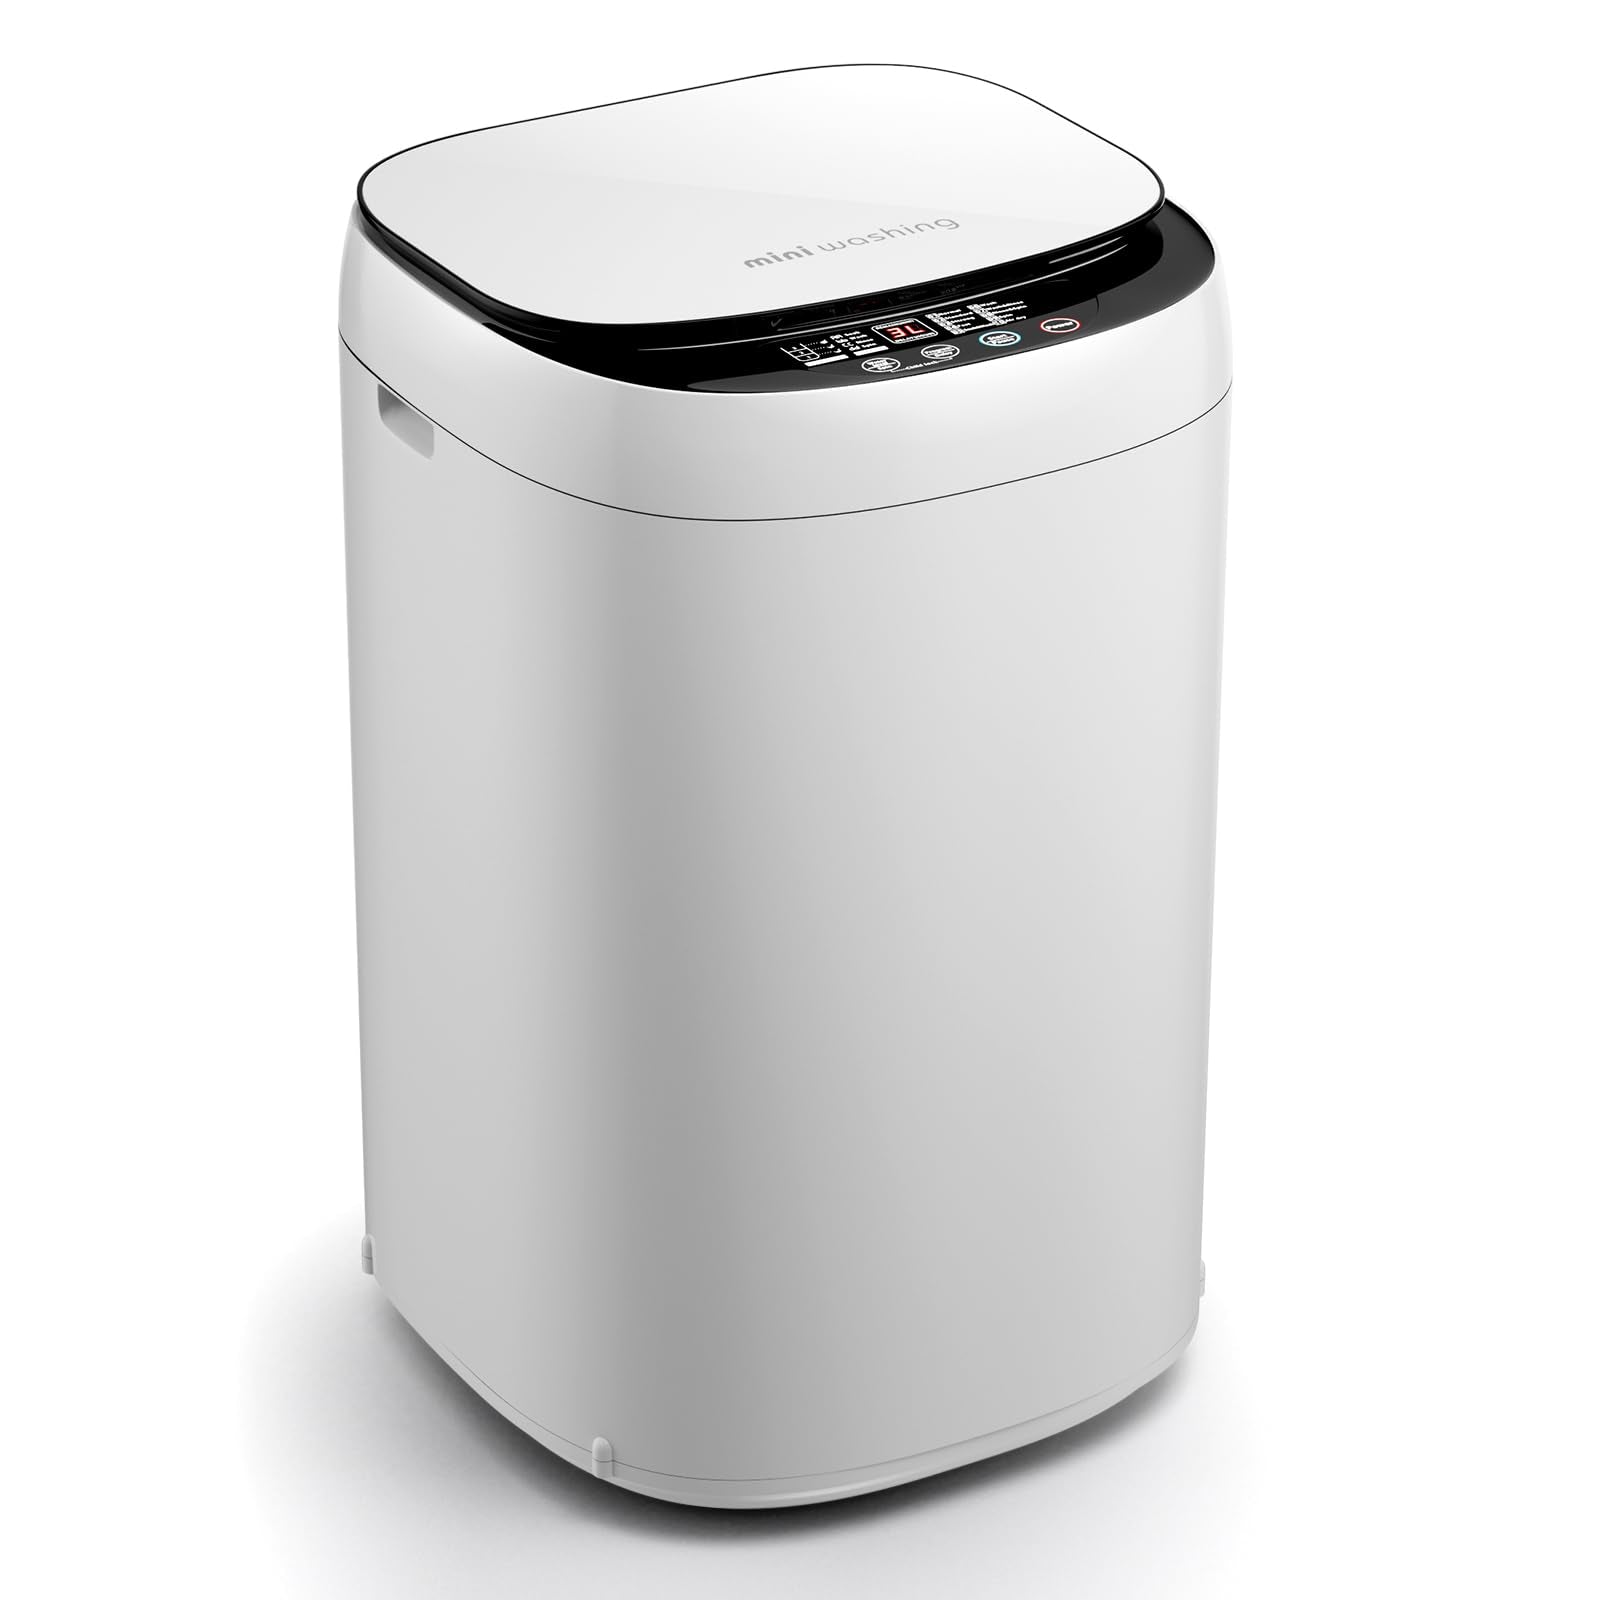 Giantex Portable Washing Machine, White